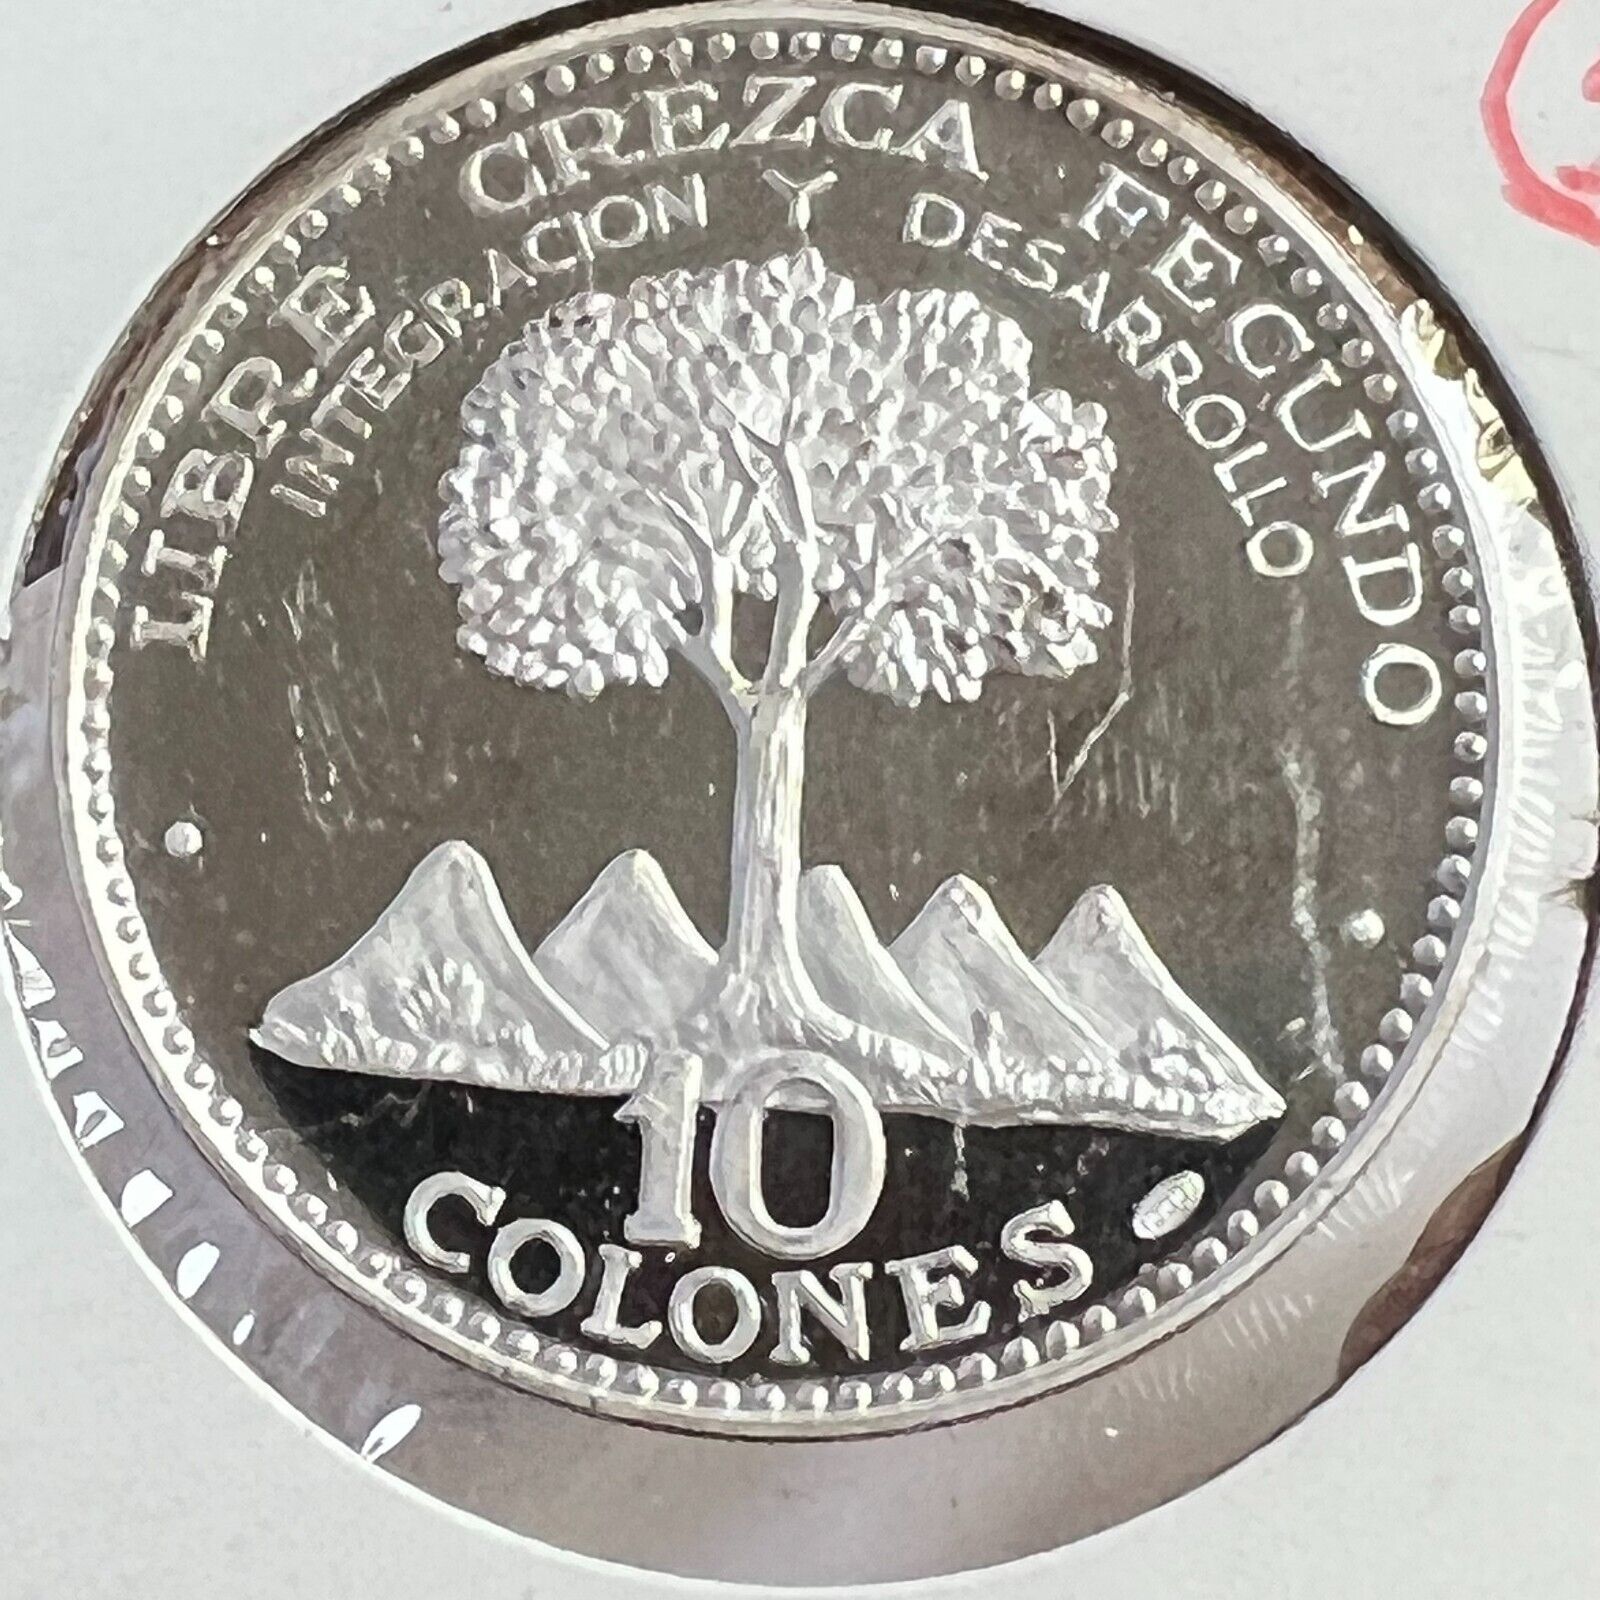 1970 Costa Rica 10 Colones Silver Kapok Tree Proof - 5,157 Mintage, Km#192